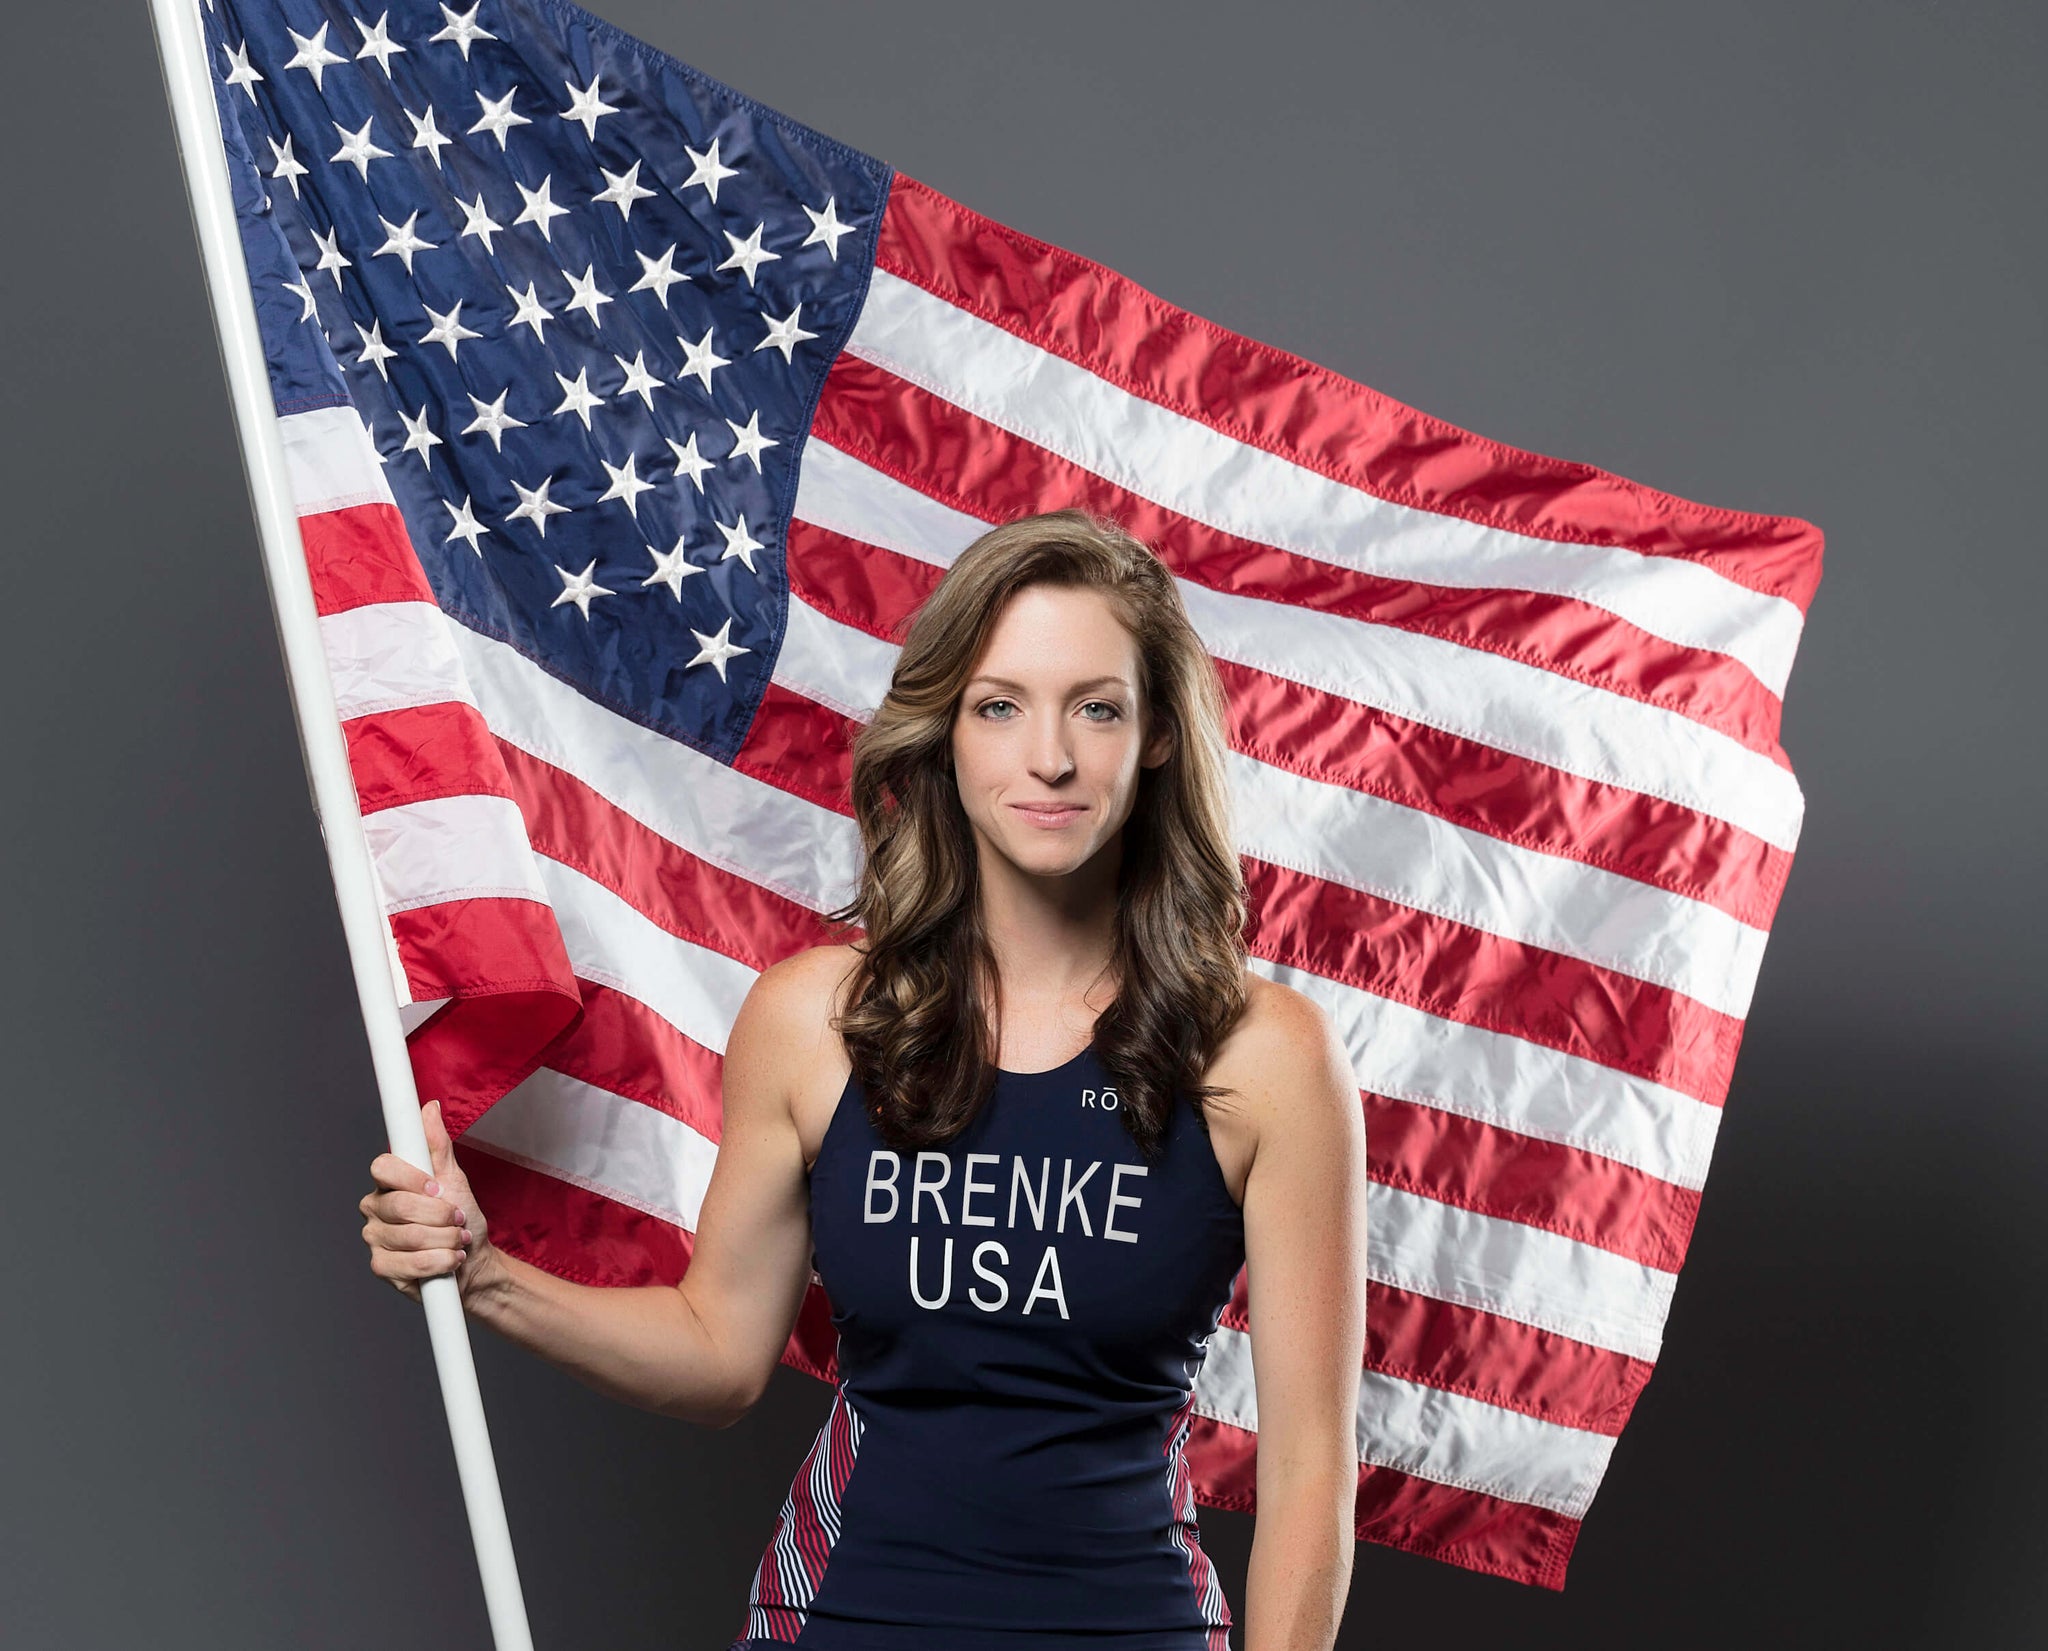 FitLegally's Rachel Brenke to Represent Team USA at World Championships